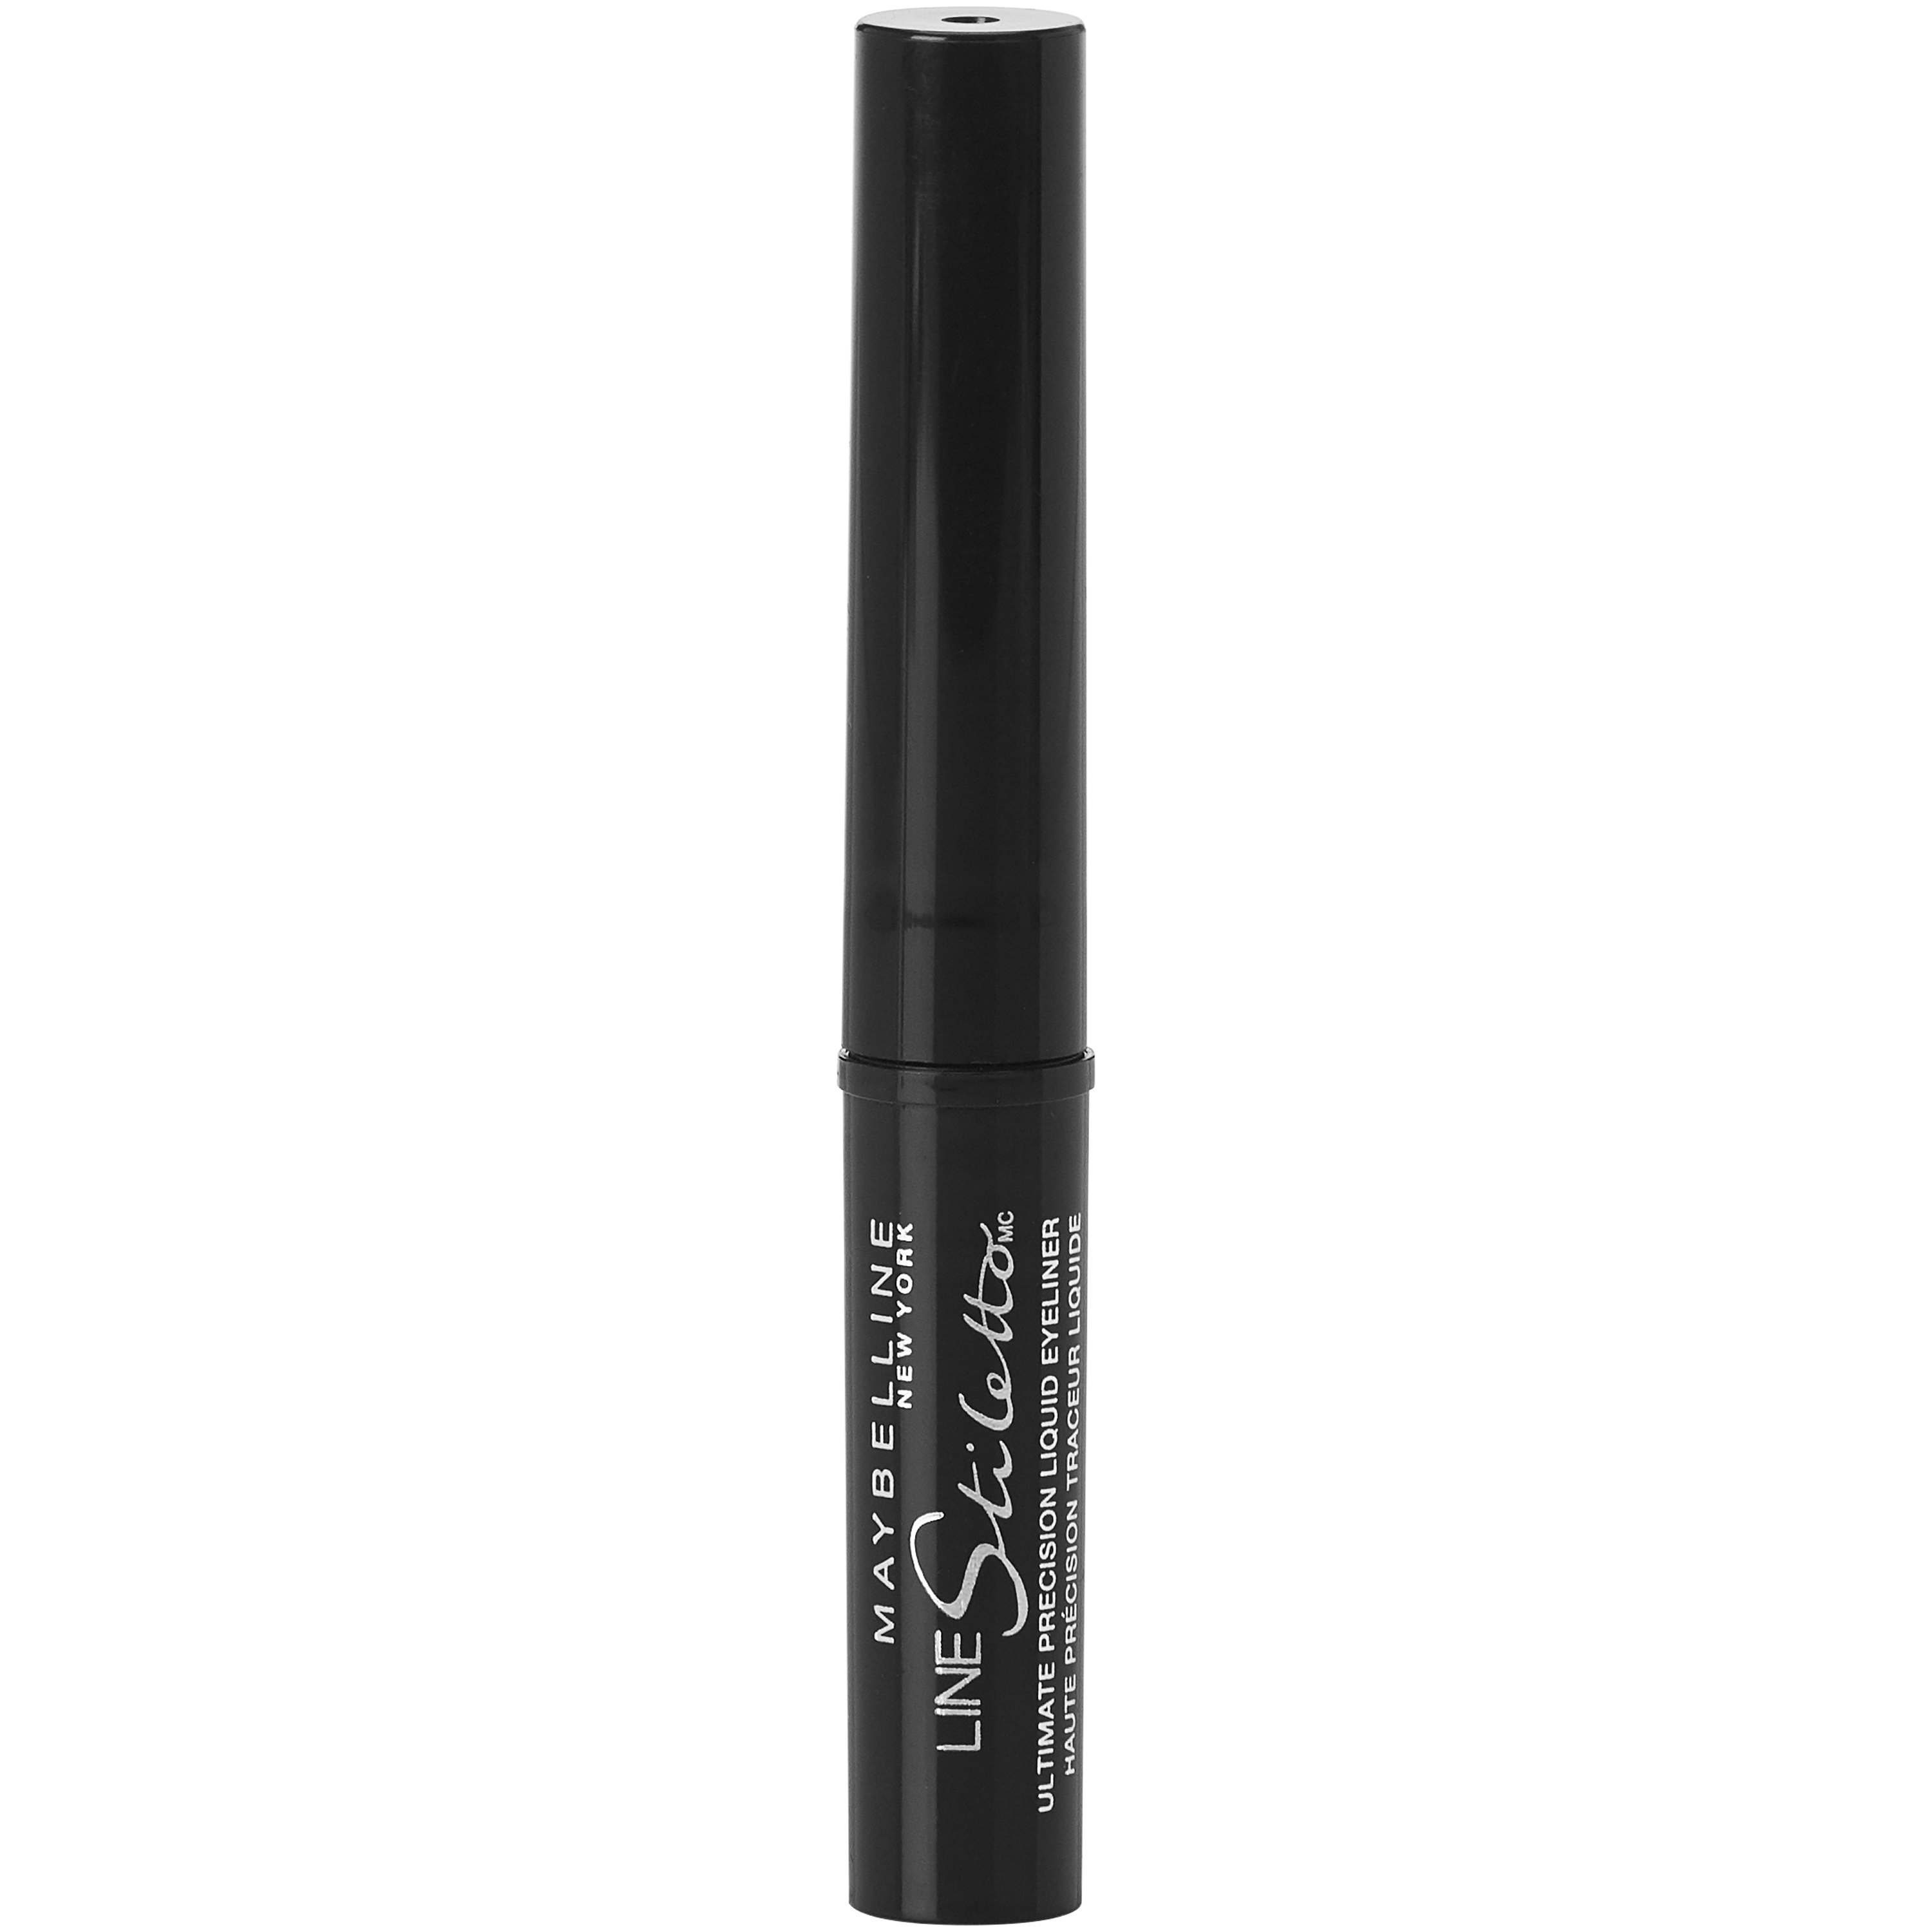 Maybelline Line Stiletto Ultimate Precision Liquid Eyeliner, Blackest Black - image 5 of 6